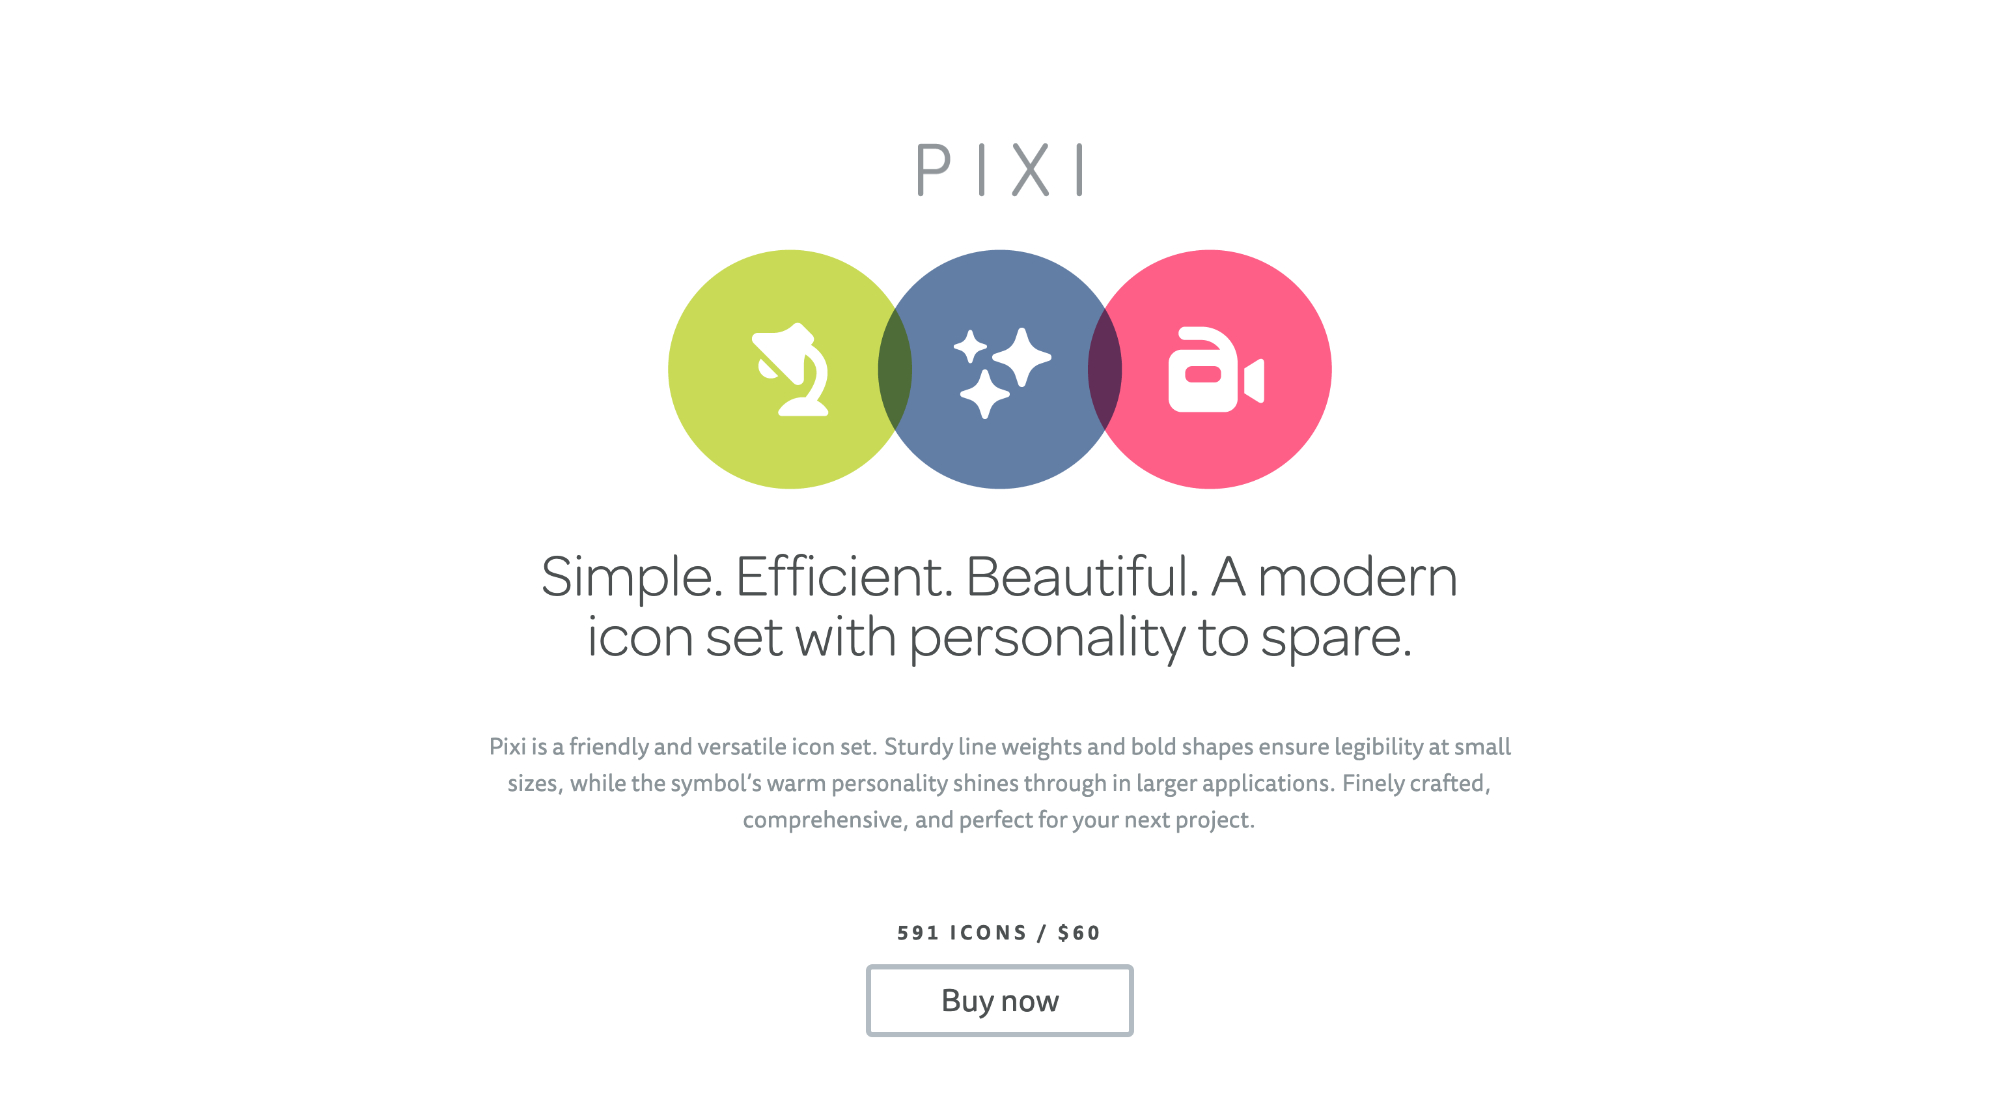 Pixi icon pack website